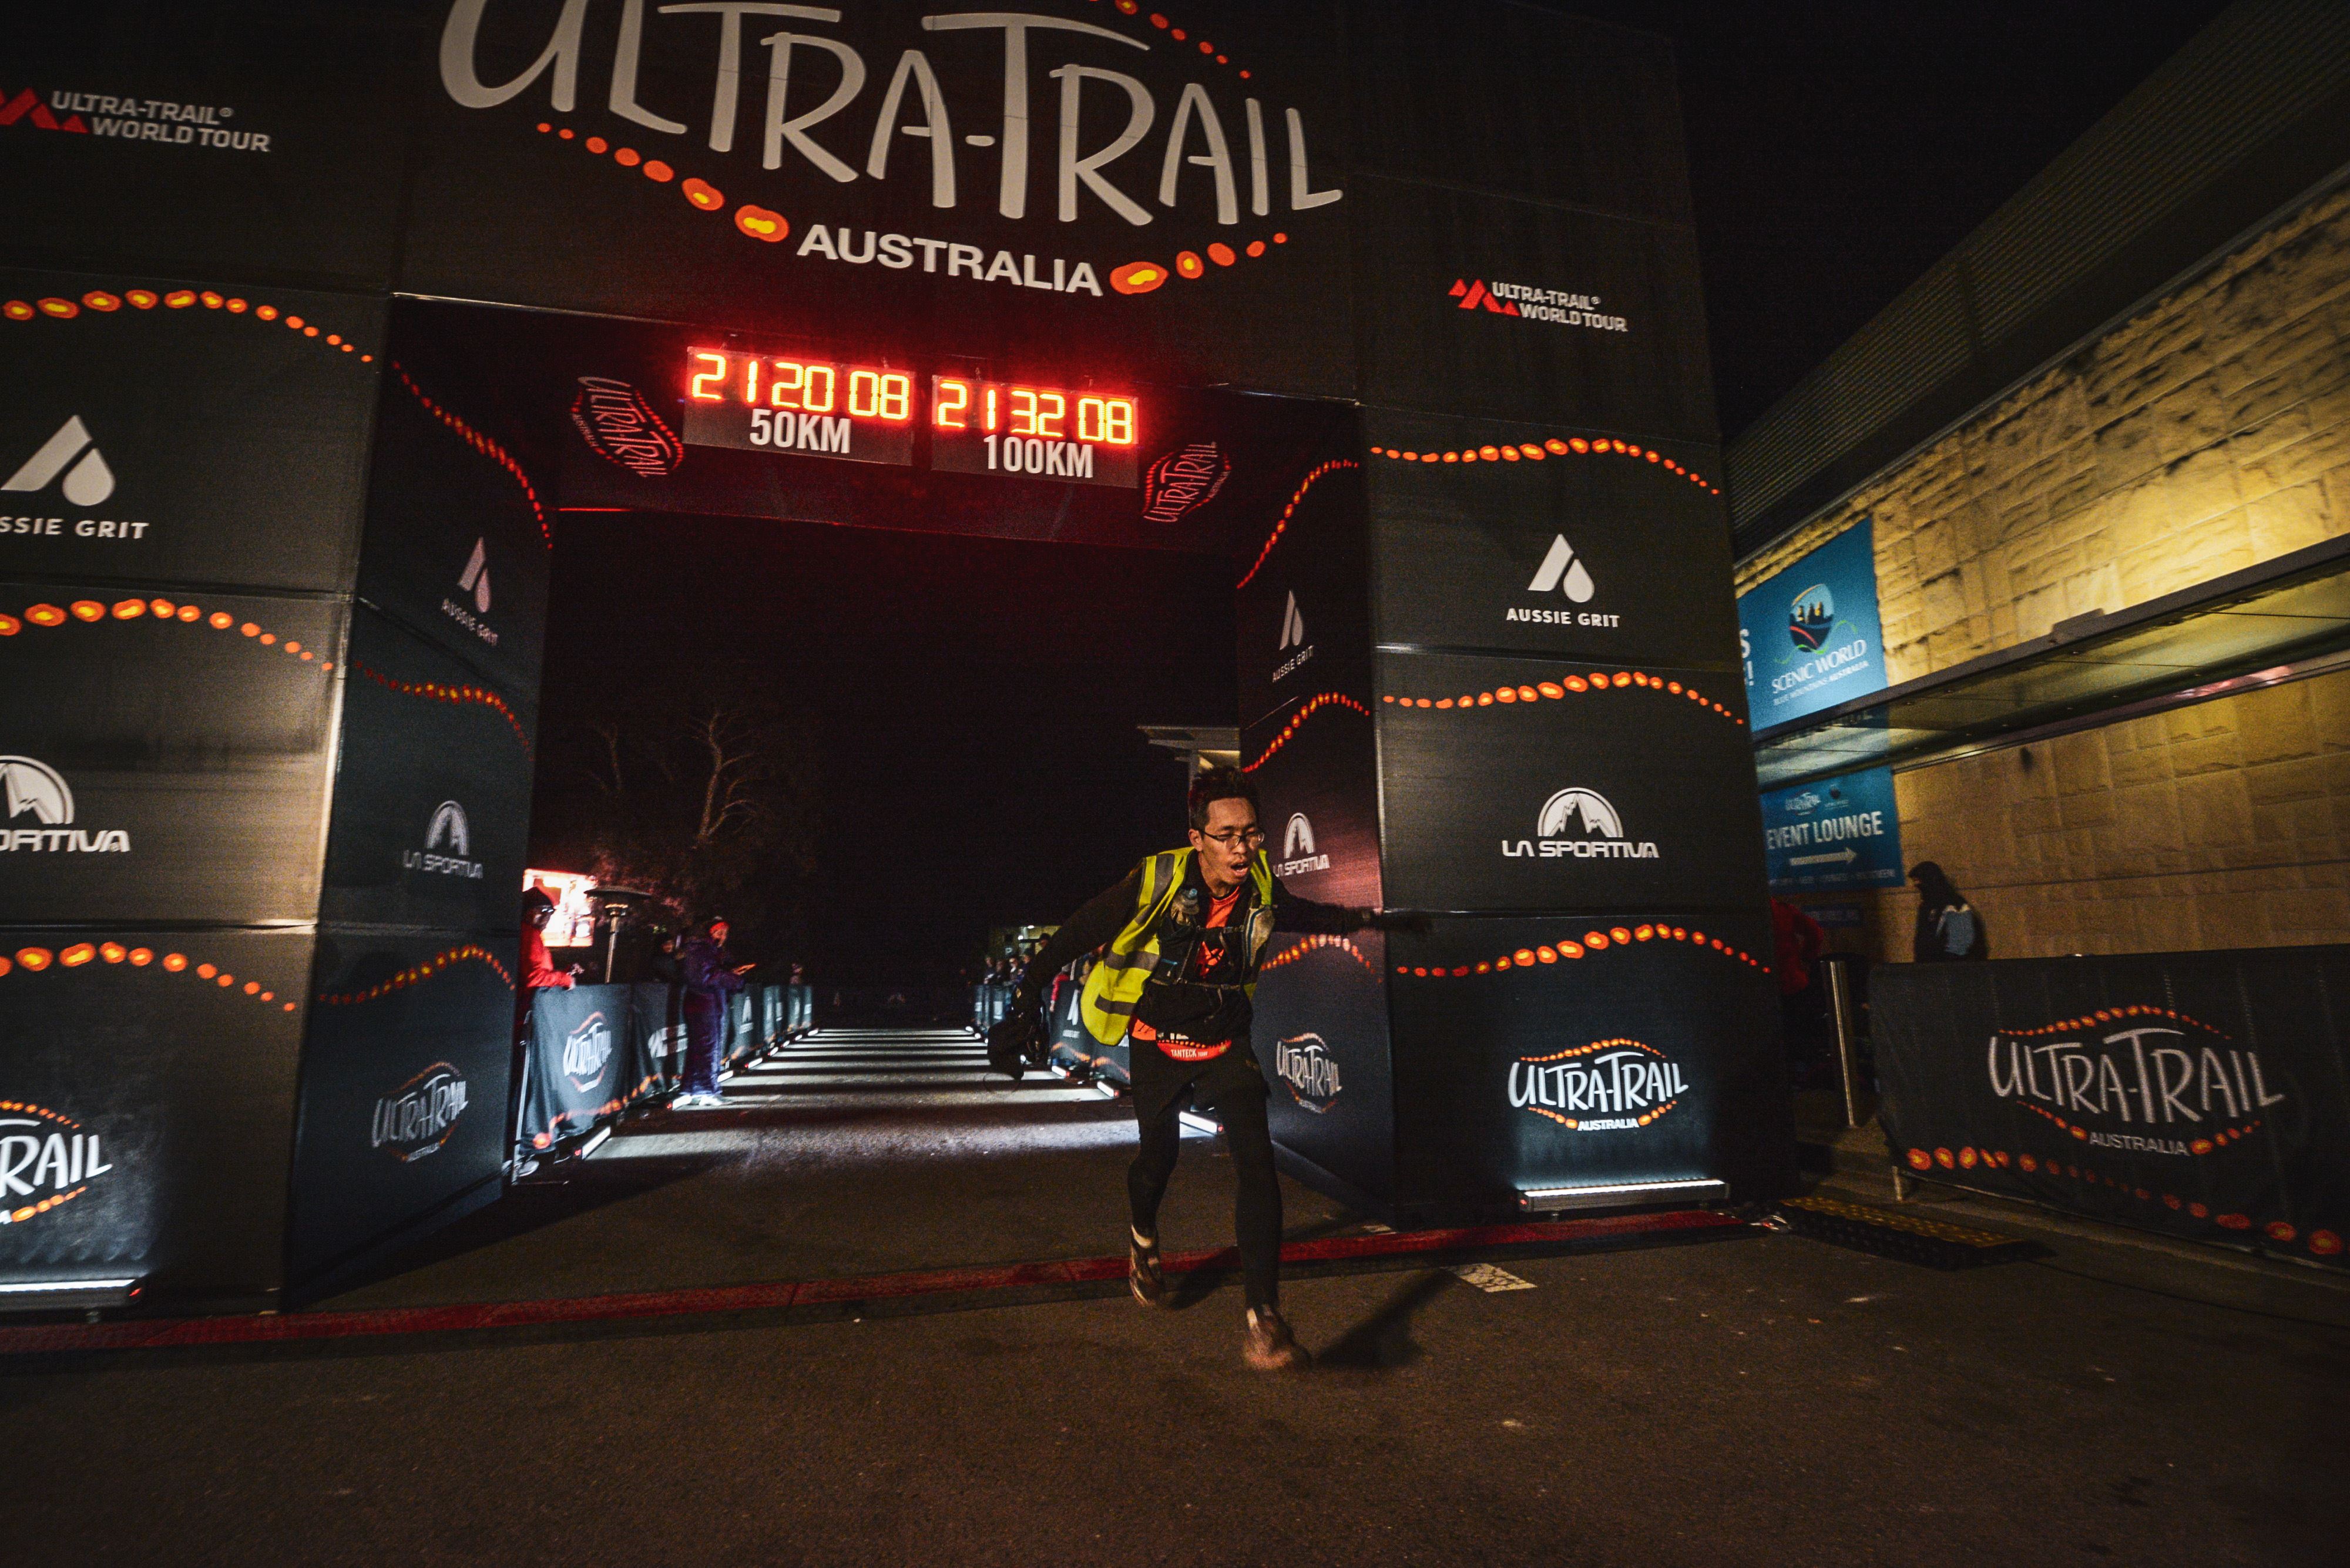 The author crosses the finishing line (100km) at Ultra-Trail Australia 2019. Image: Sportograft.